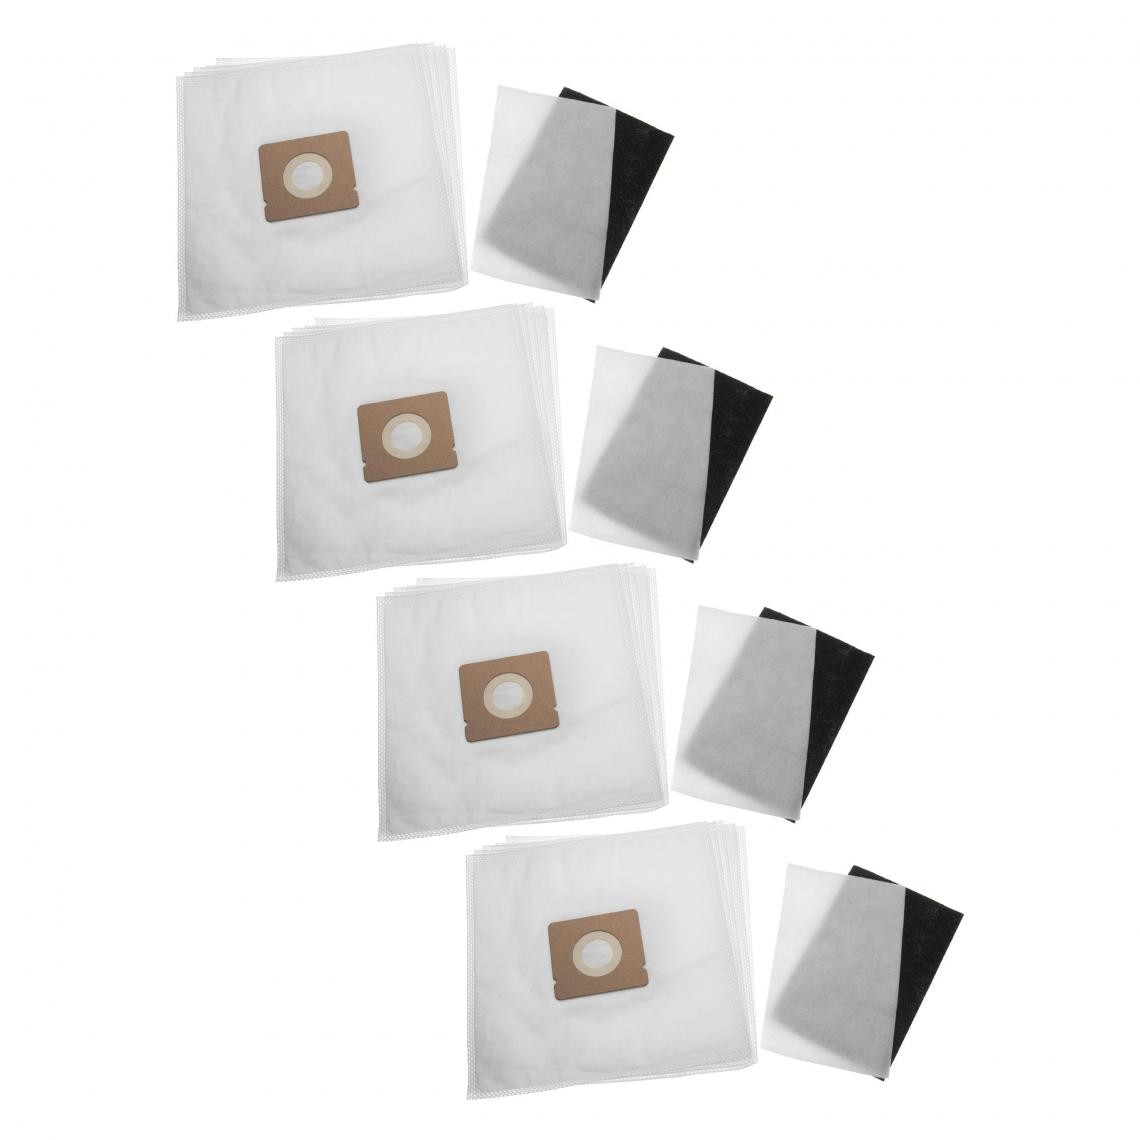 Vhbw - vhbw Lot de sacs (microfibres non tissées) + filtre avec 24 pièces compatible avec Moulinex MO151501/4Q0, MO151701/4Q0, MO151701 aspirateur - Accessoire entretien des sols